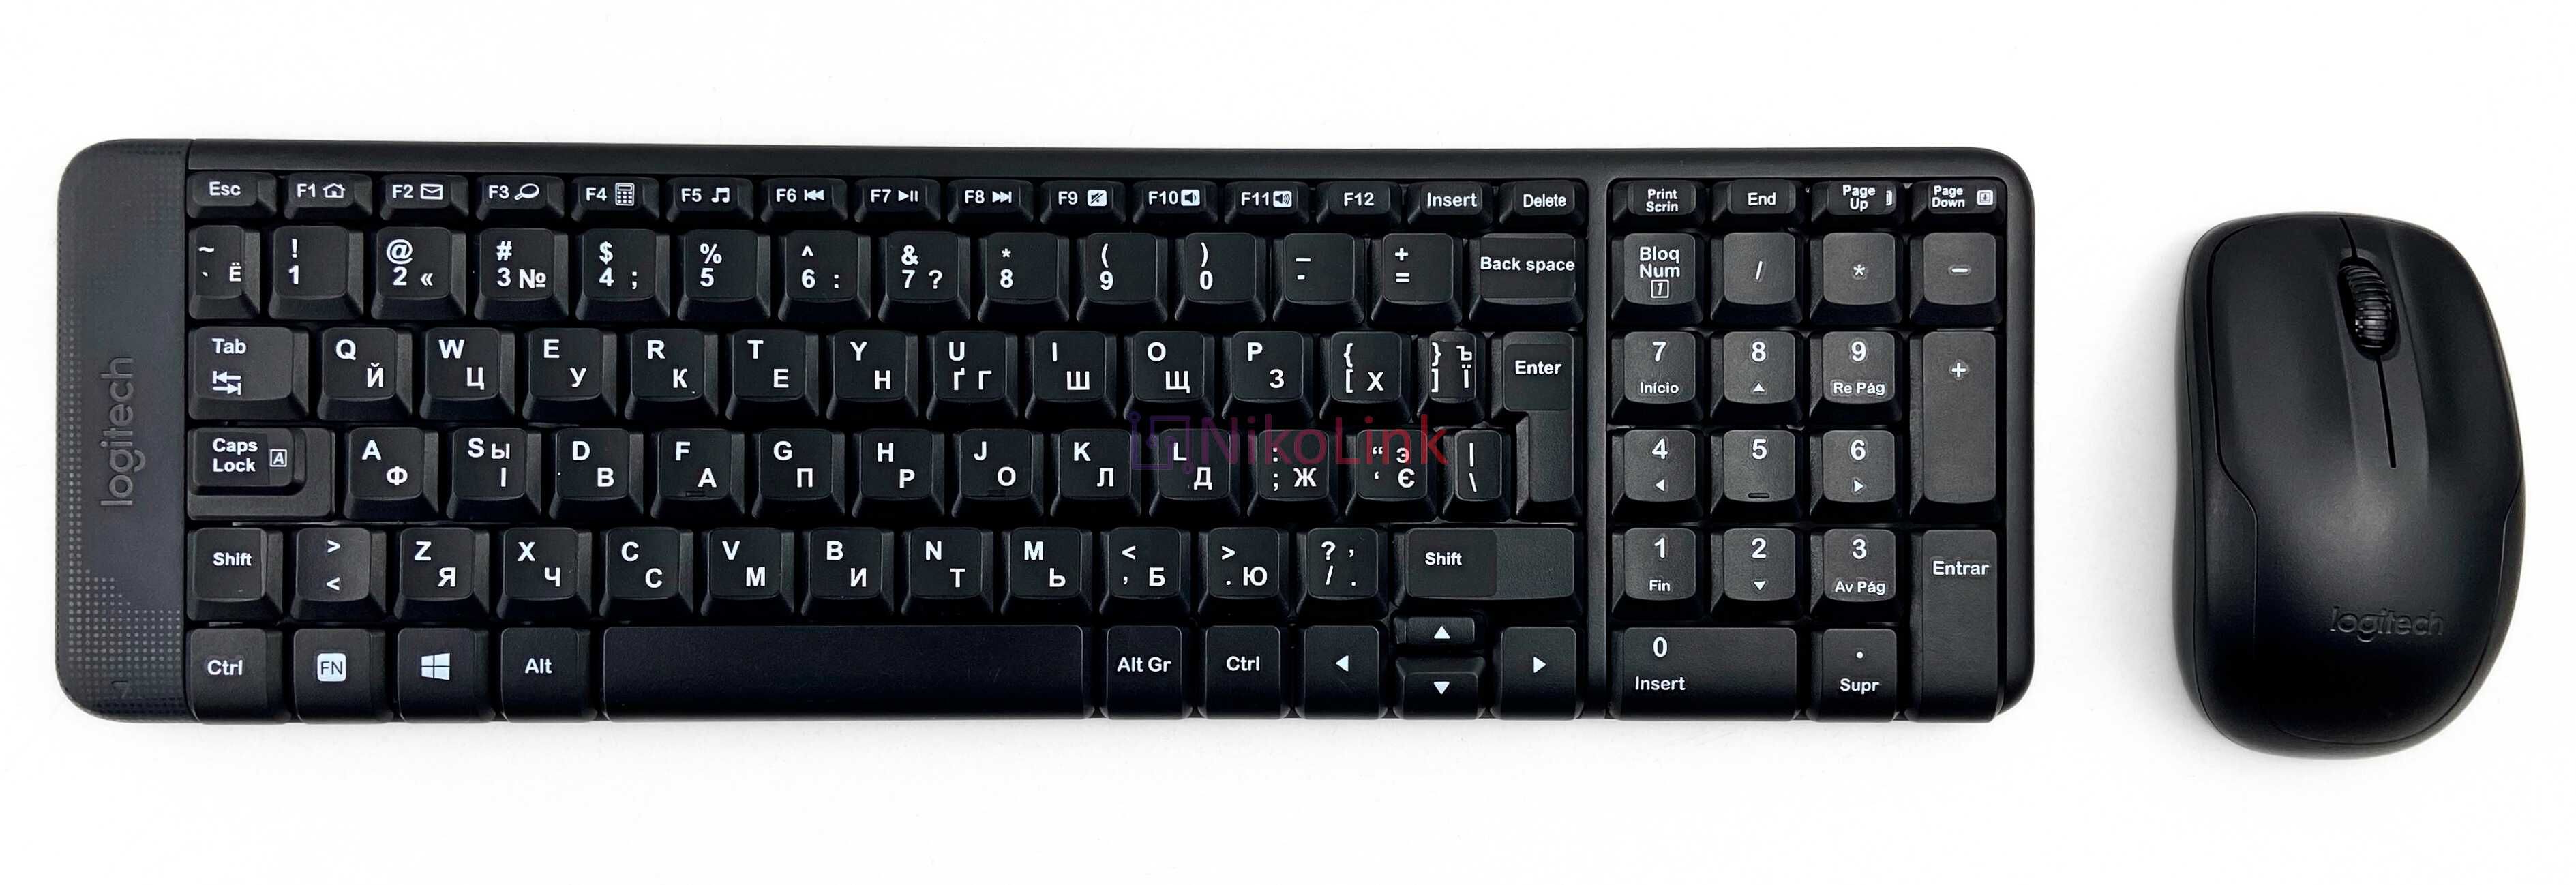 Бездротовий комплект Logitech MK220 - Миша та Клавіатура | Refurbished